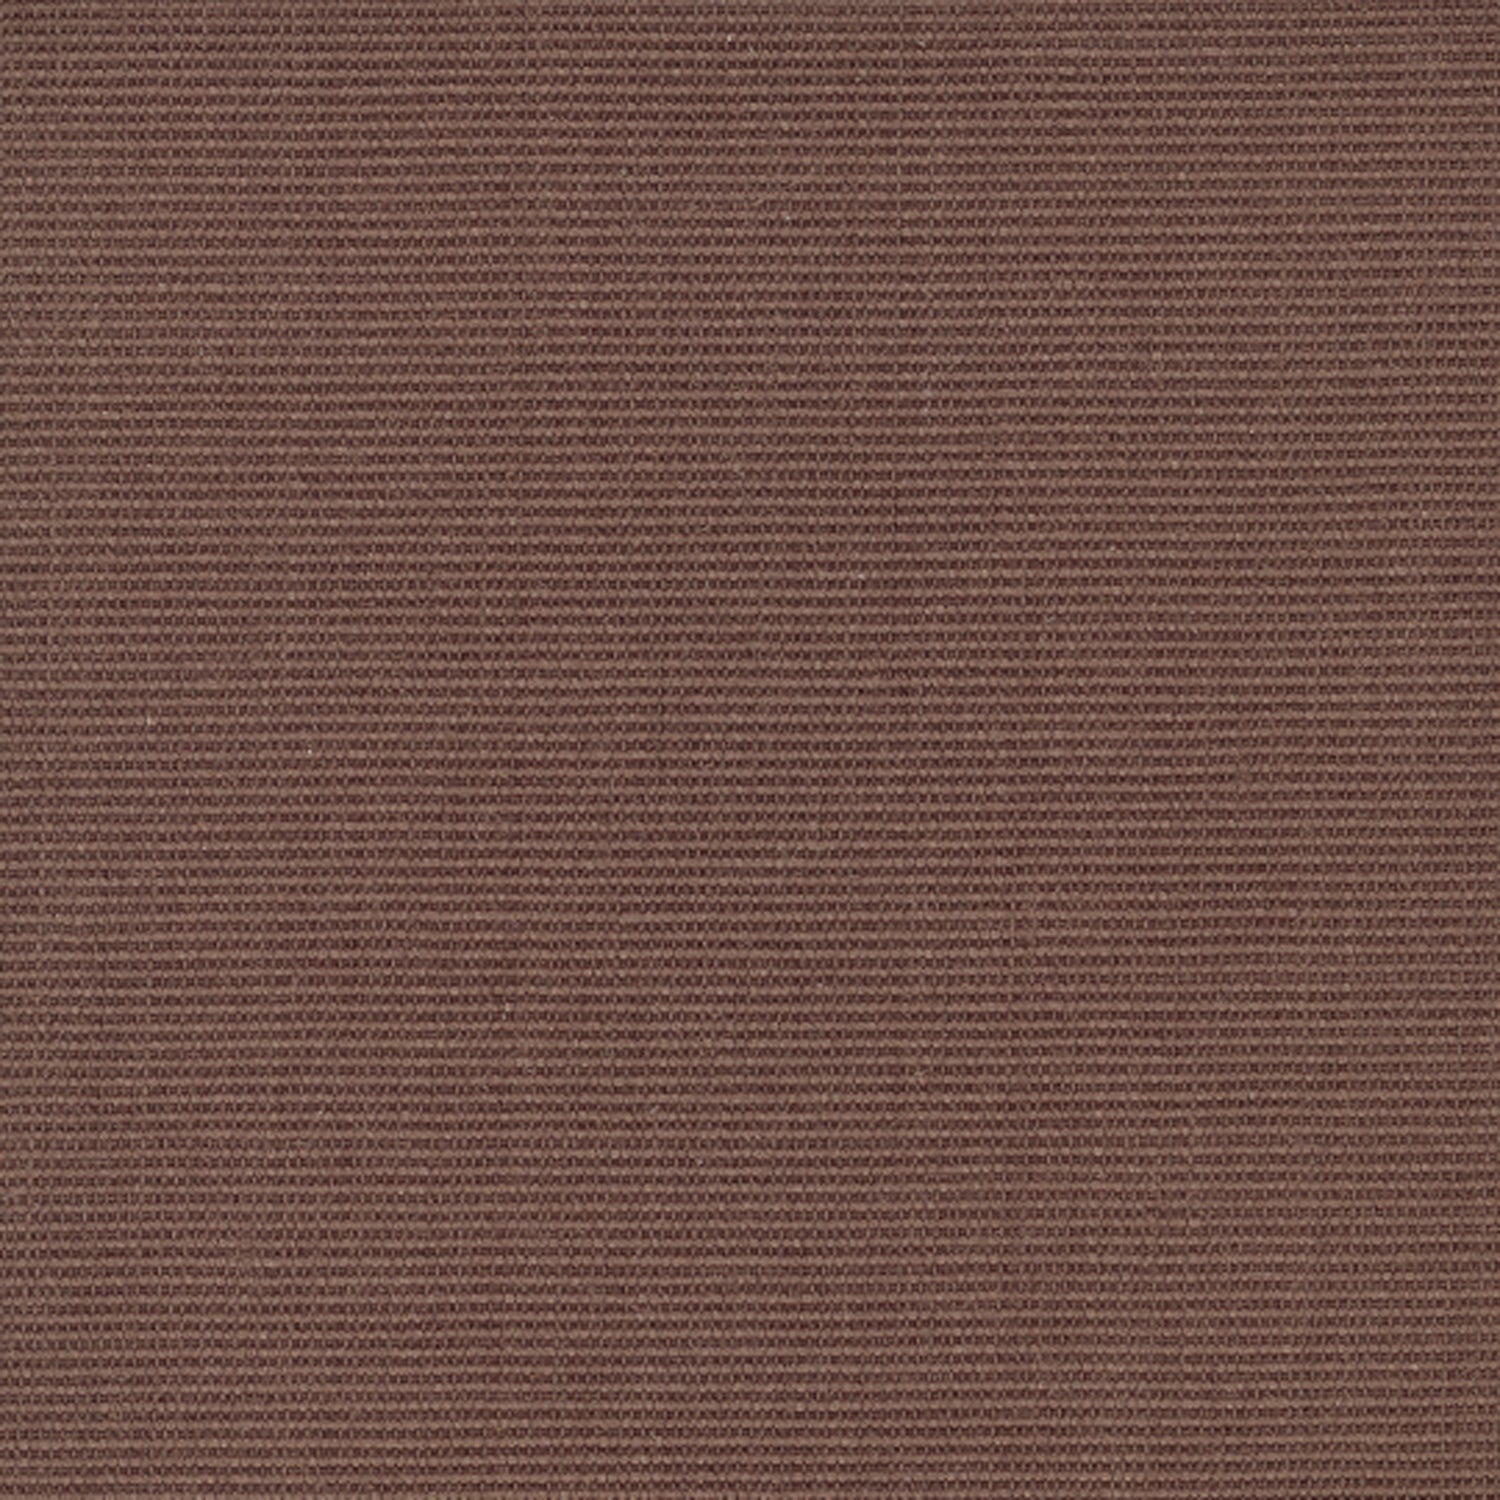 Sisal broadloom carpet swatch in a ribbed weave in "Urbane" chestnut.